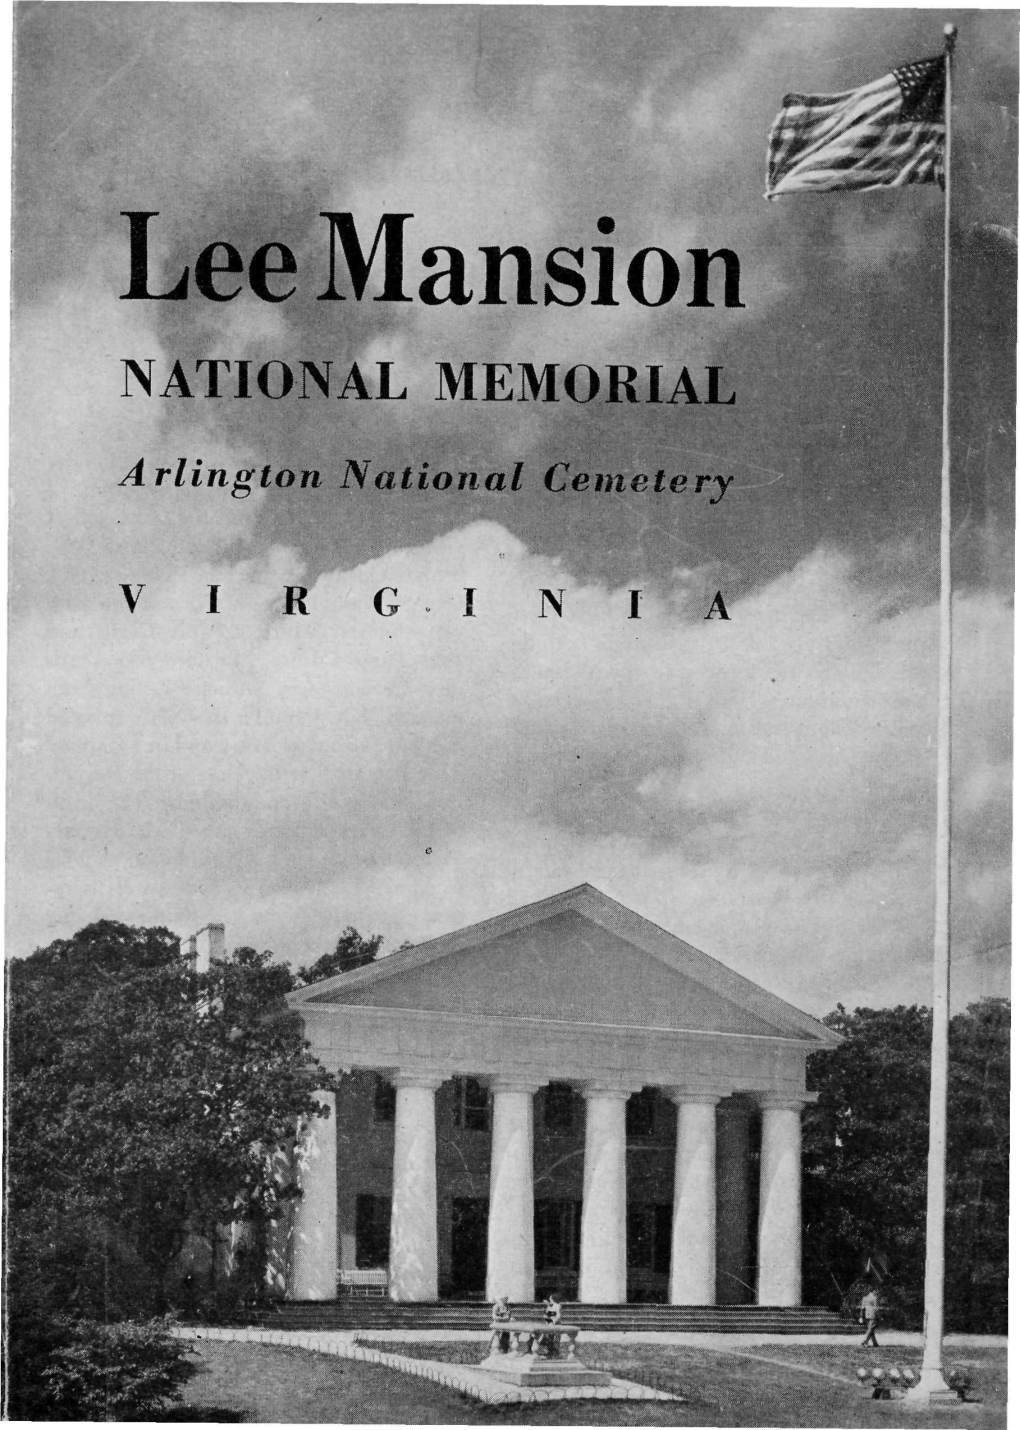 Lee Mansion NATIONAL MEMORIAL